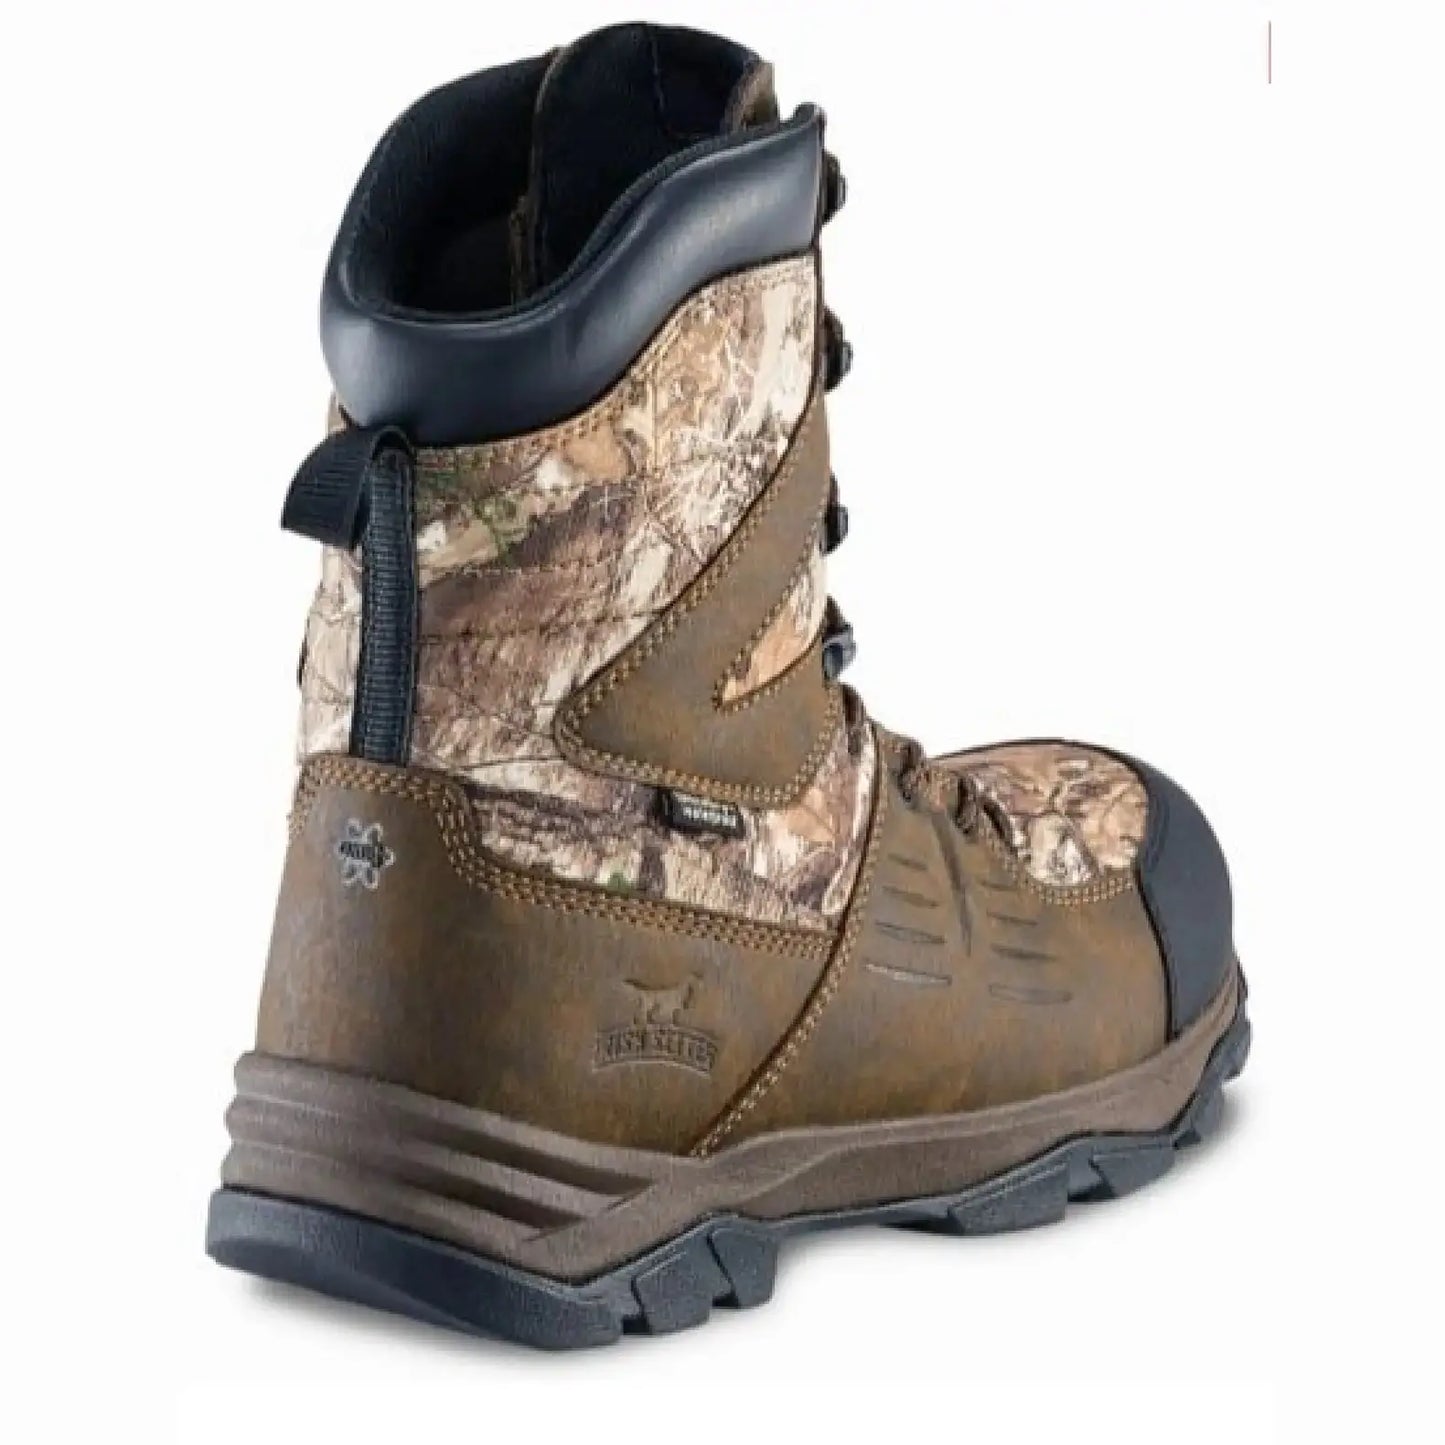 Irish Setter Men’s Hunting Boots 10" Terrain Insulated RealTree Camo 2714 - Irish Setter